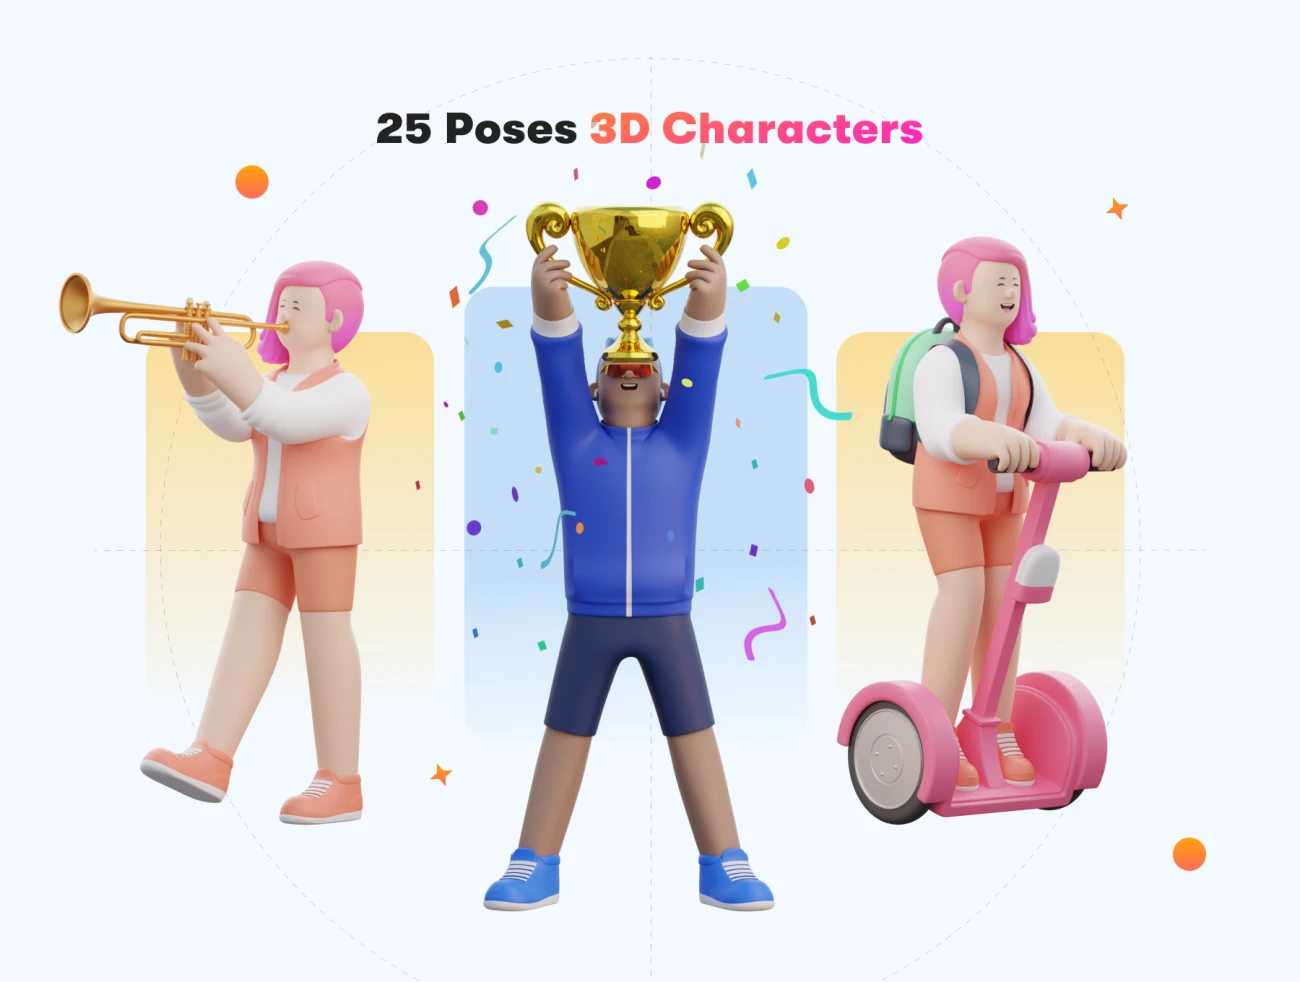 25款假日旅行3D人物模型素材 Aisha - Holiday 3D Character Pack .blend. png-3D/图标-到位啦UI